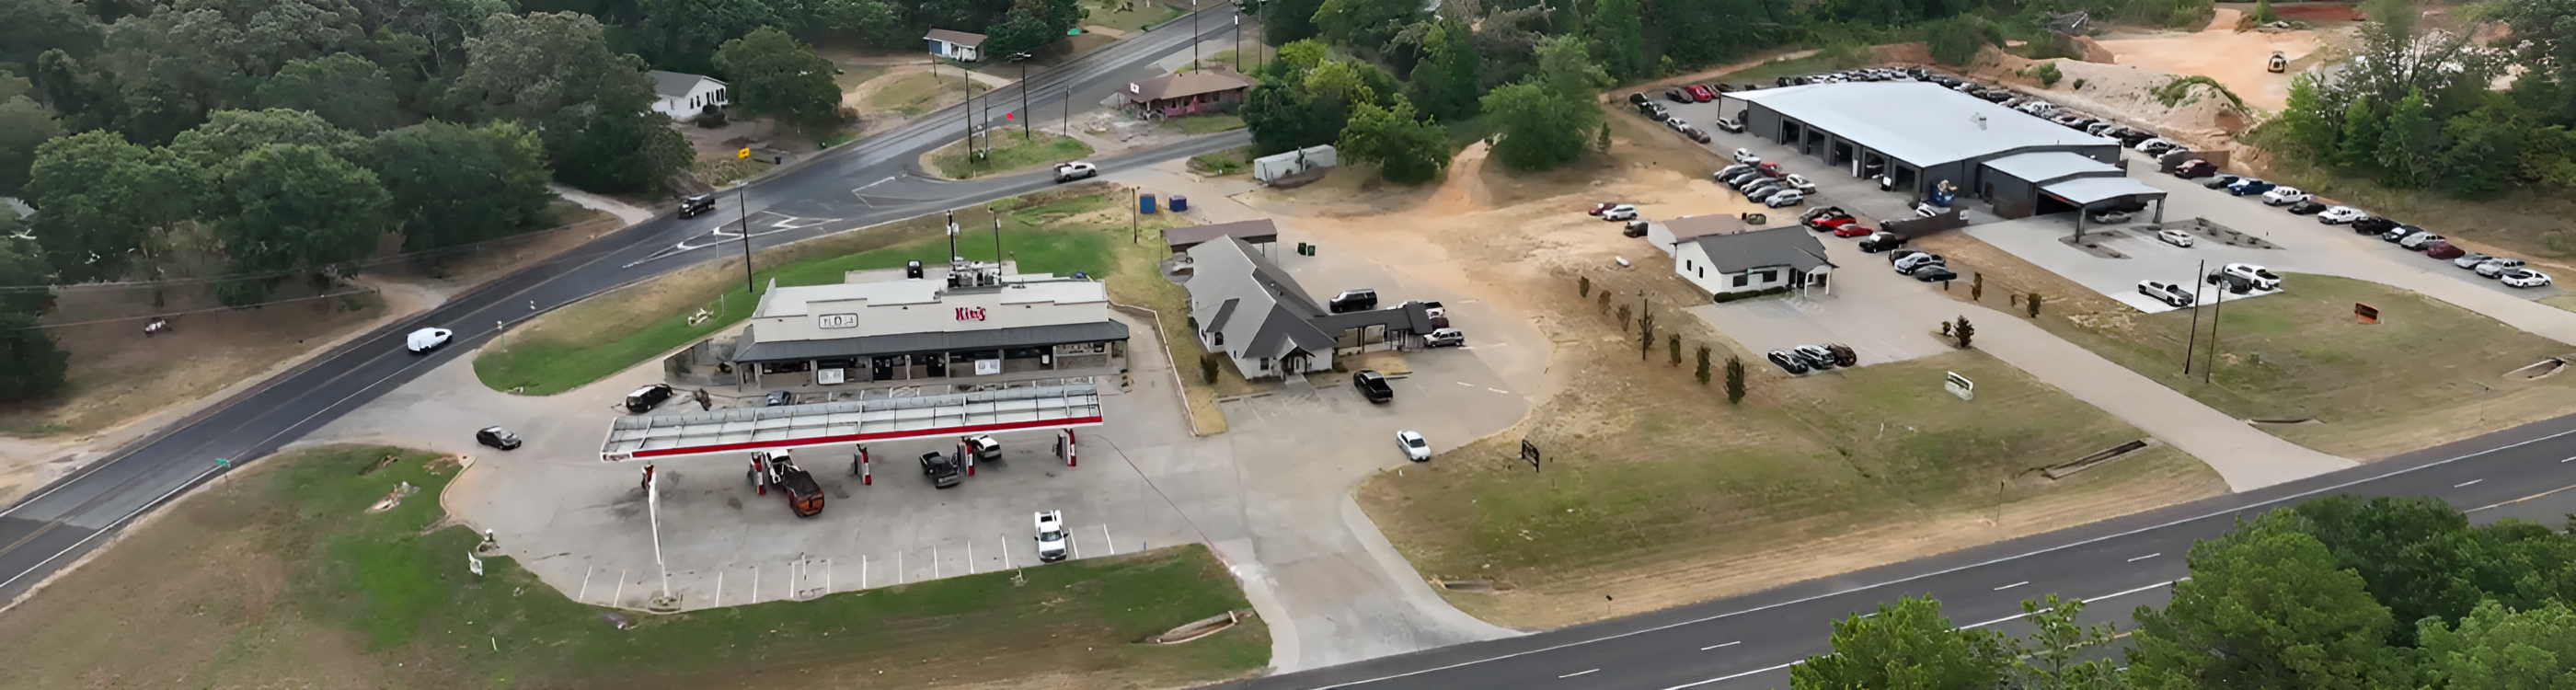 Kim's gas station aerial view